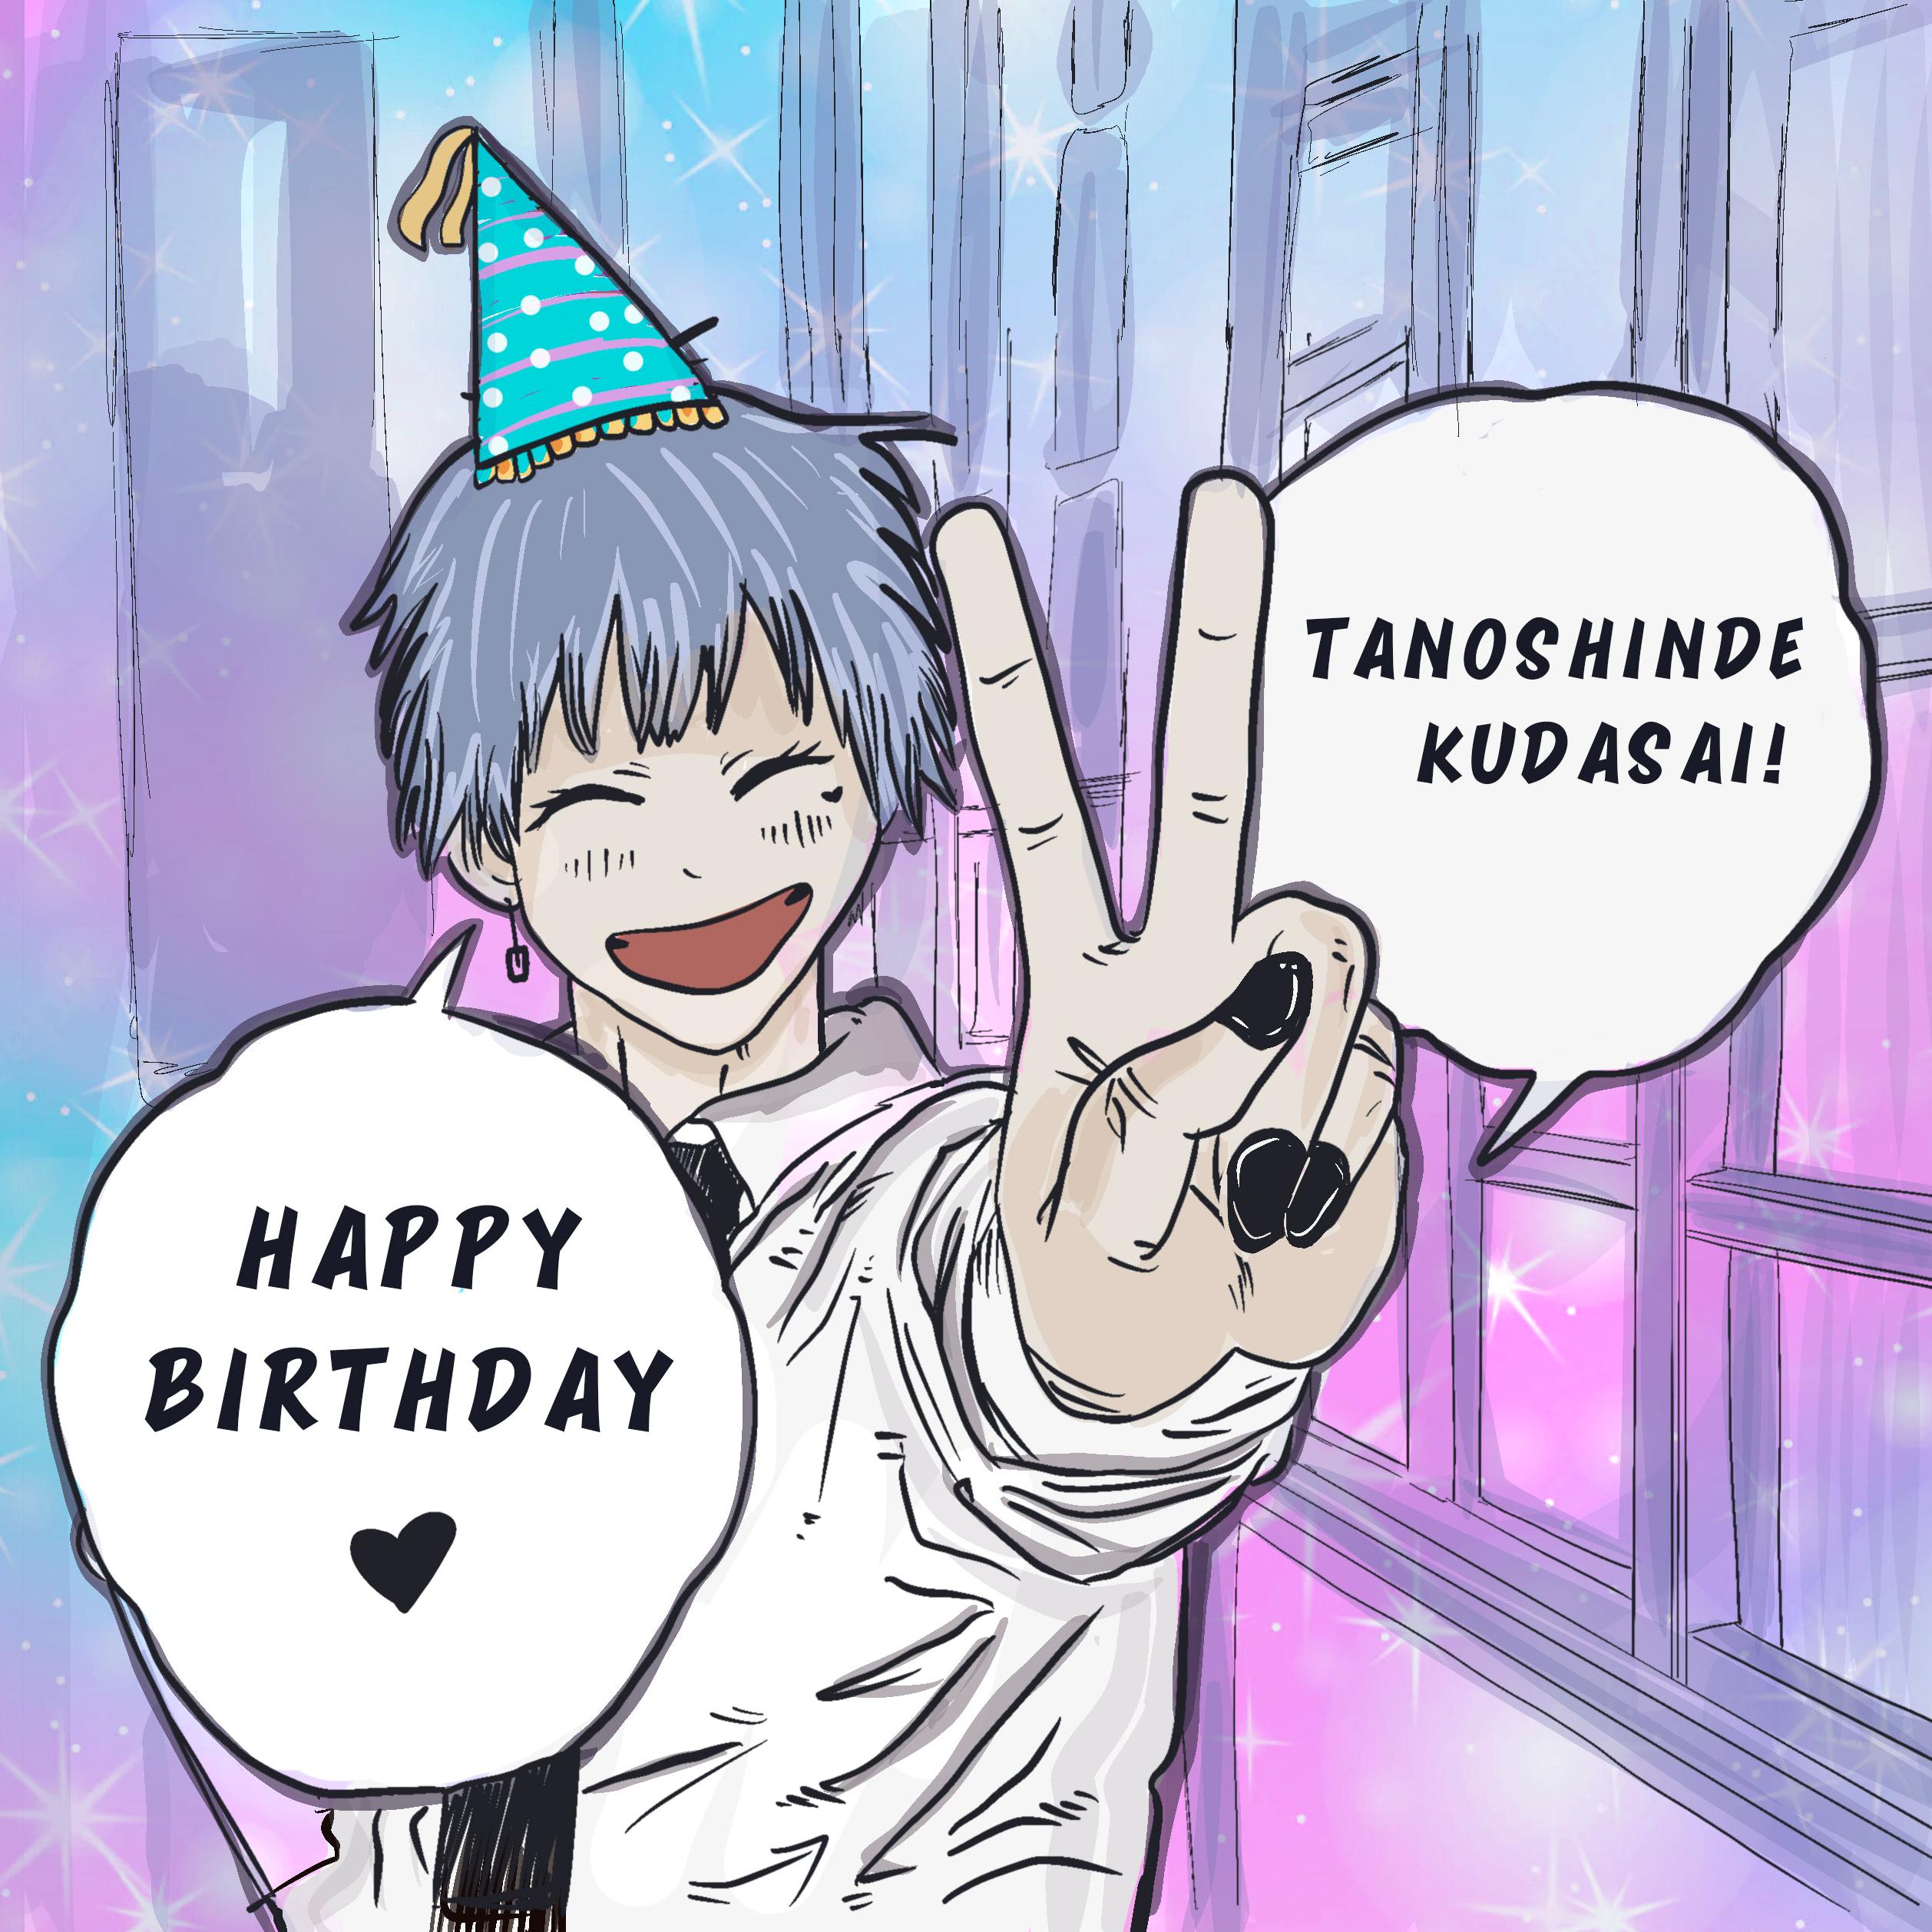 Amazon.com : Happy Birthday Card - Studio Ghibli Soot Ball Birthday Card  Spirited Away Totoro Japanese Anime Friend Hand Drawn Kiki - Spider Birthday  Card, 5 x 7 inches : Office Products